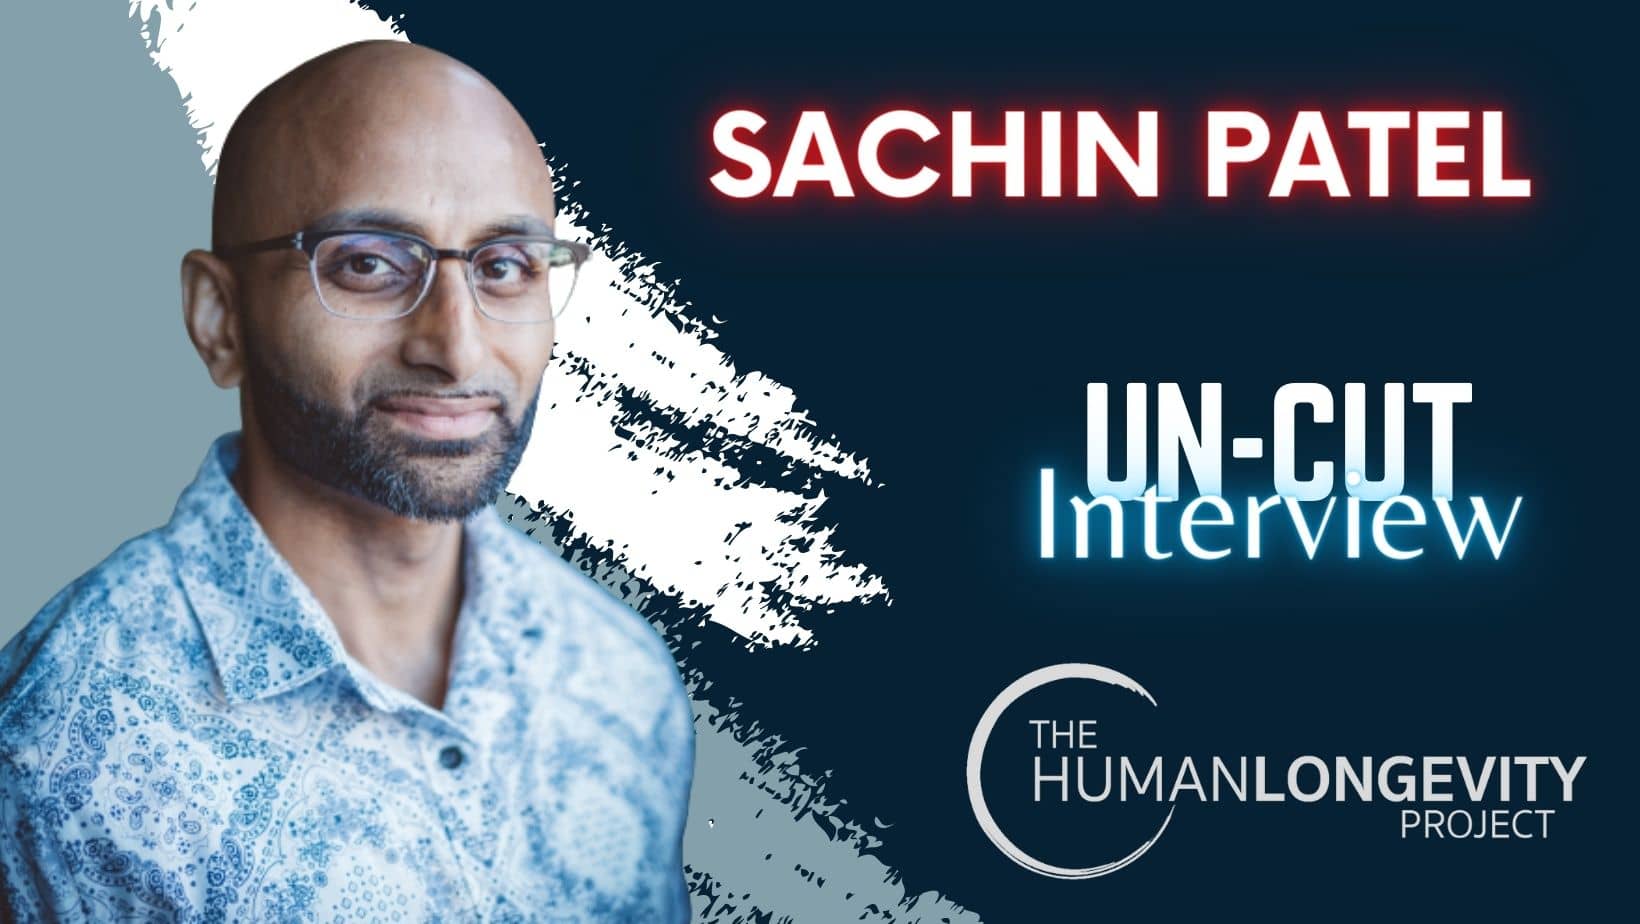 Human Longevity Project Uncut Interview With Dr. Sachin Patel